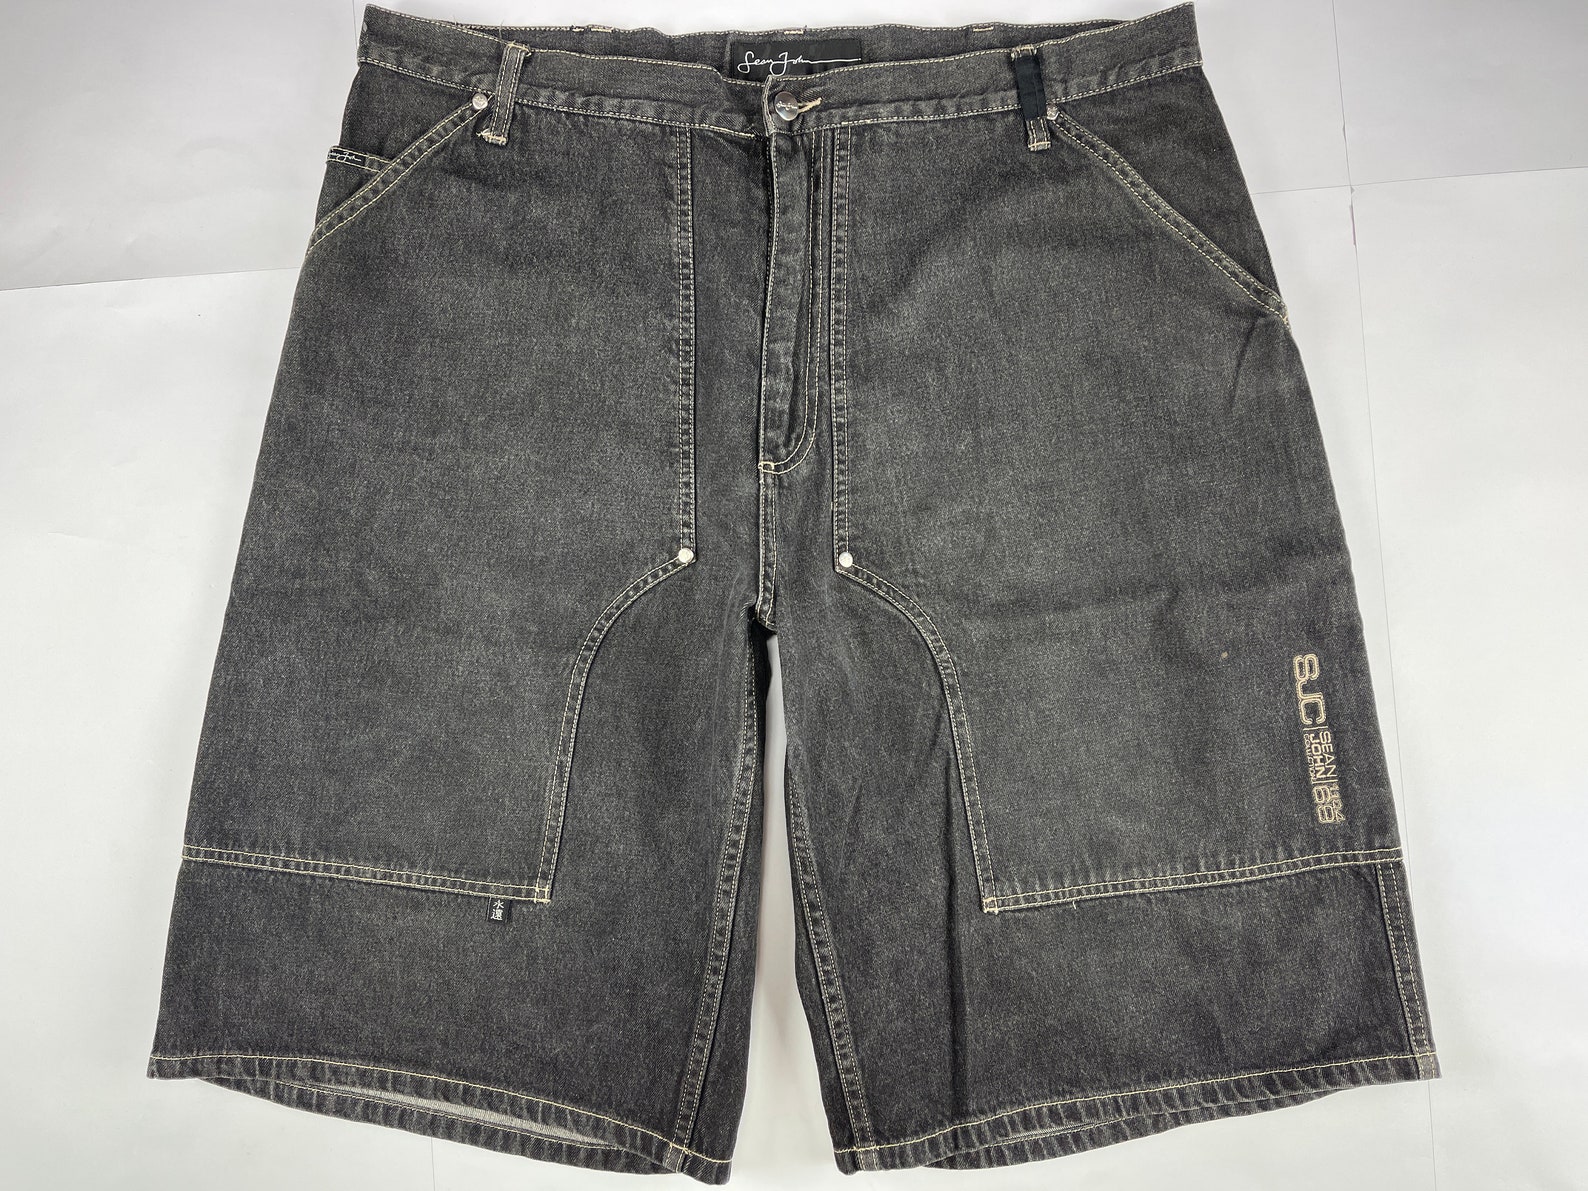 Sean John shorts vintage jeans shorts 90s hip hop clothing | Etsy